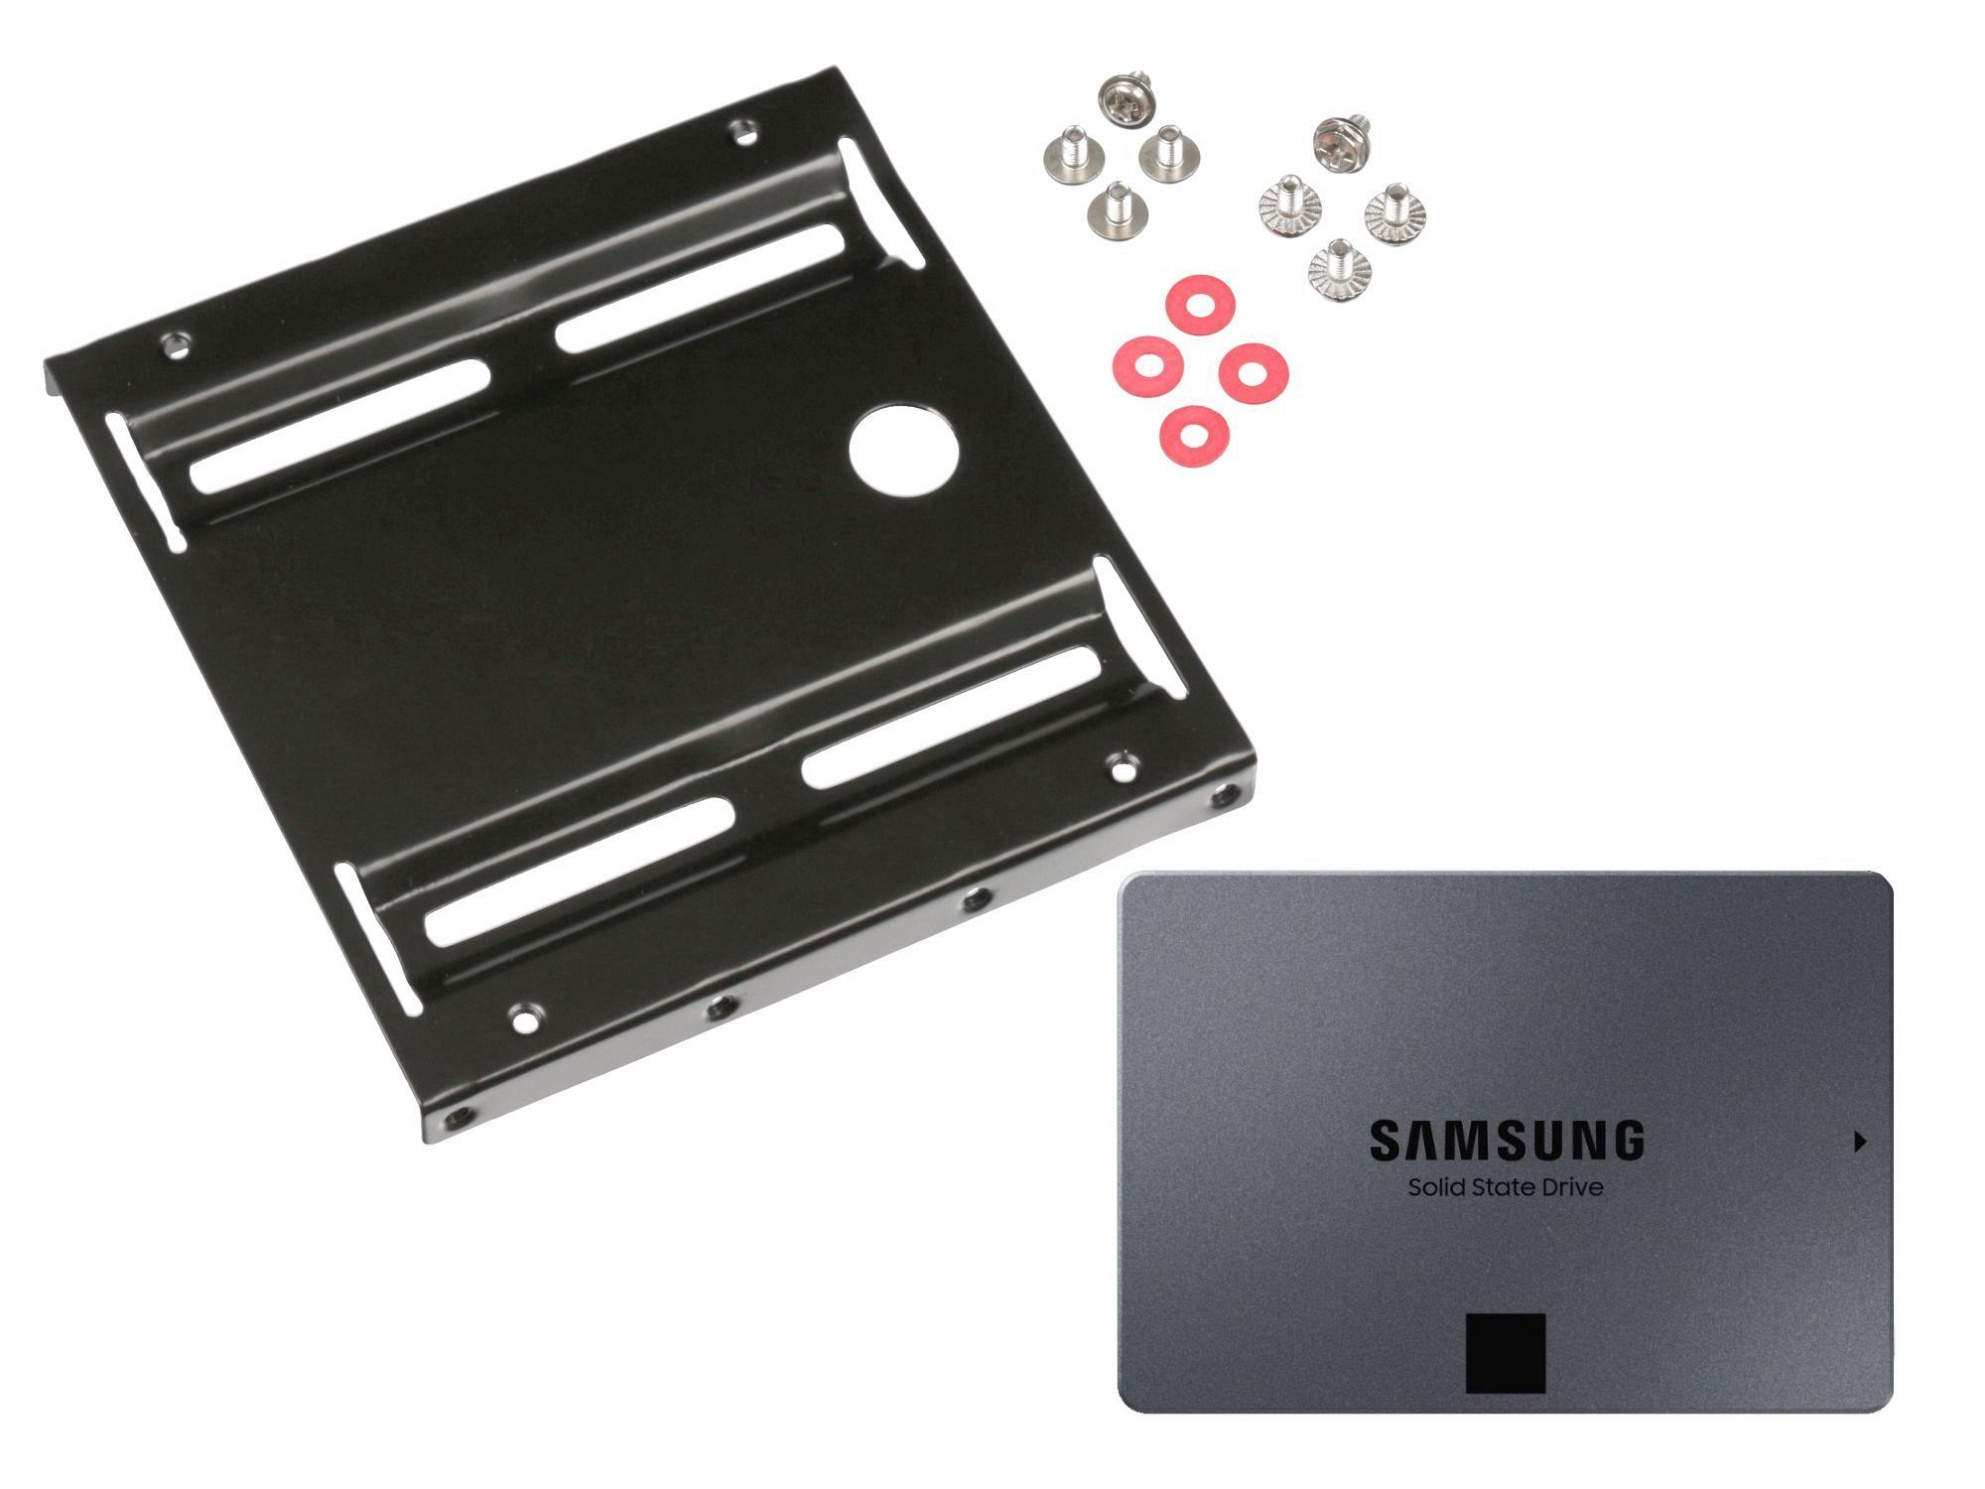 XHGS2T SSD Festplatte 2TB (3,5 Zoll / 8,9 cm) inkl. Monatge Set 2,5" auf 3,5"